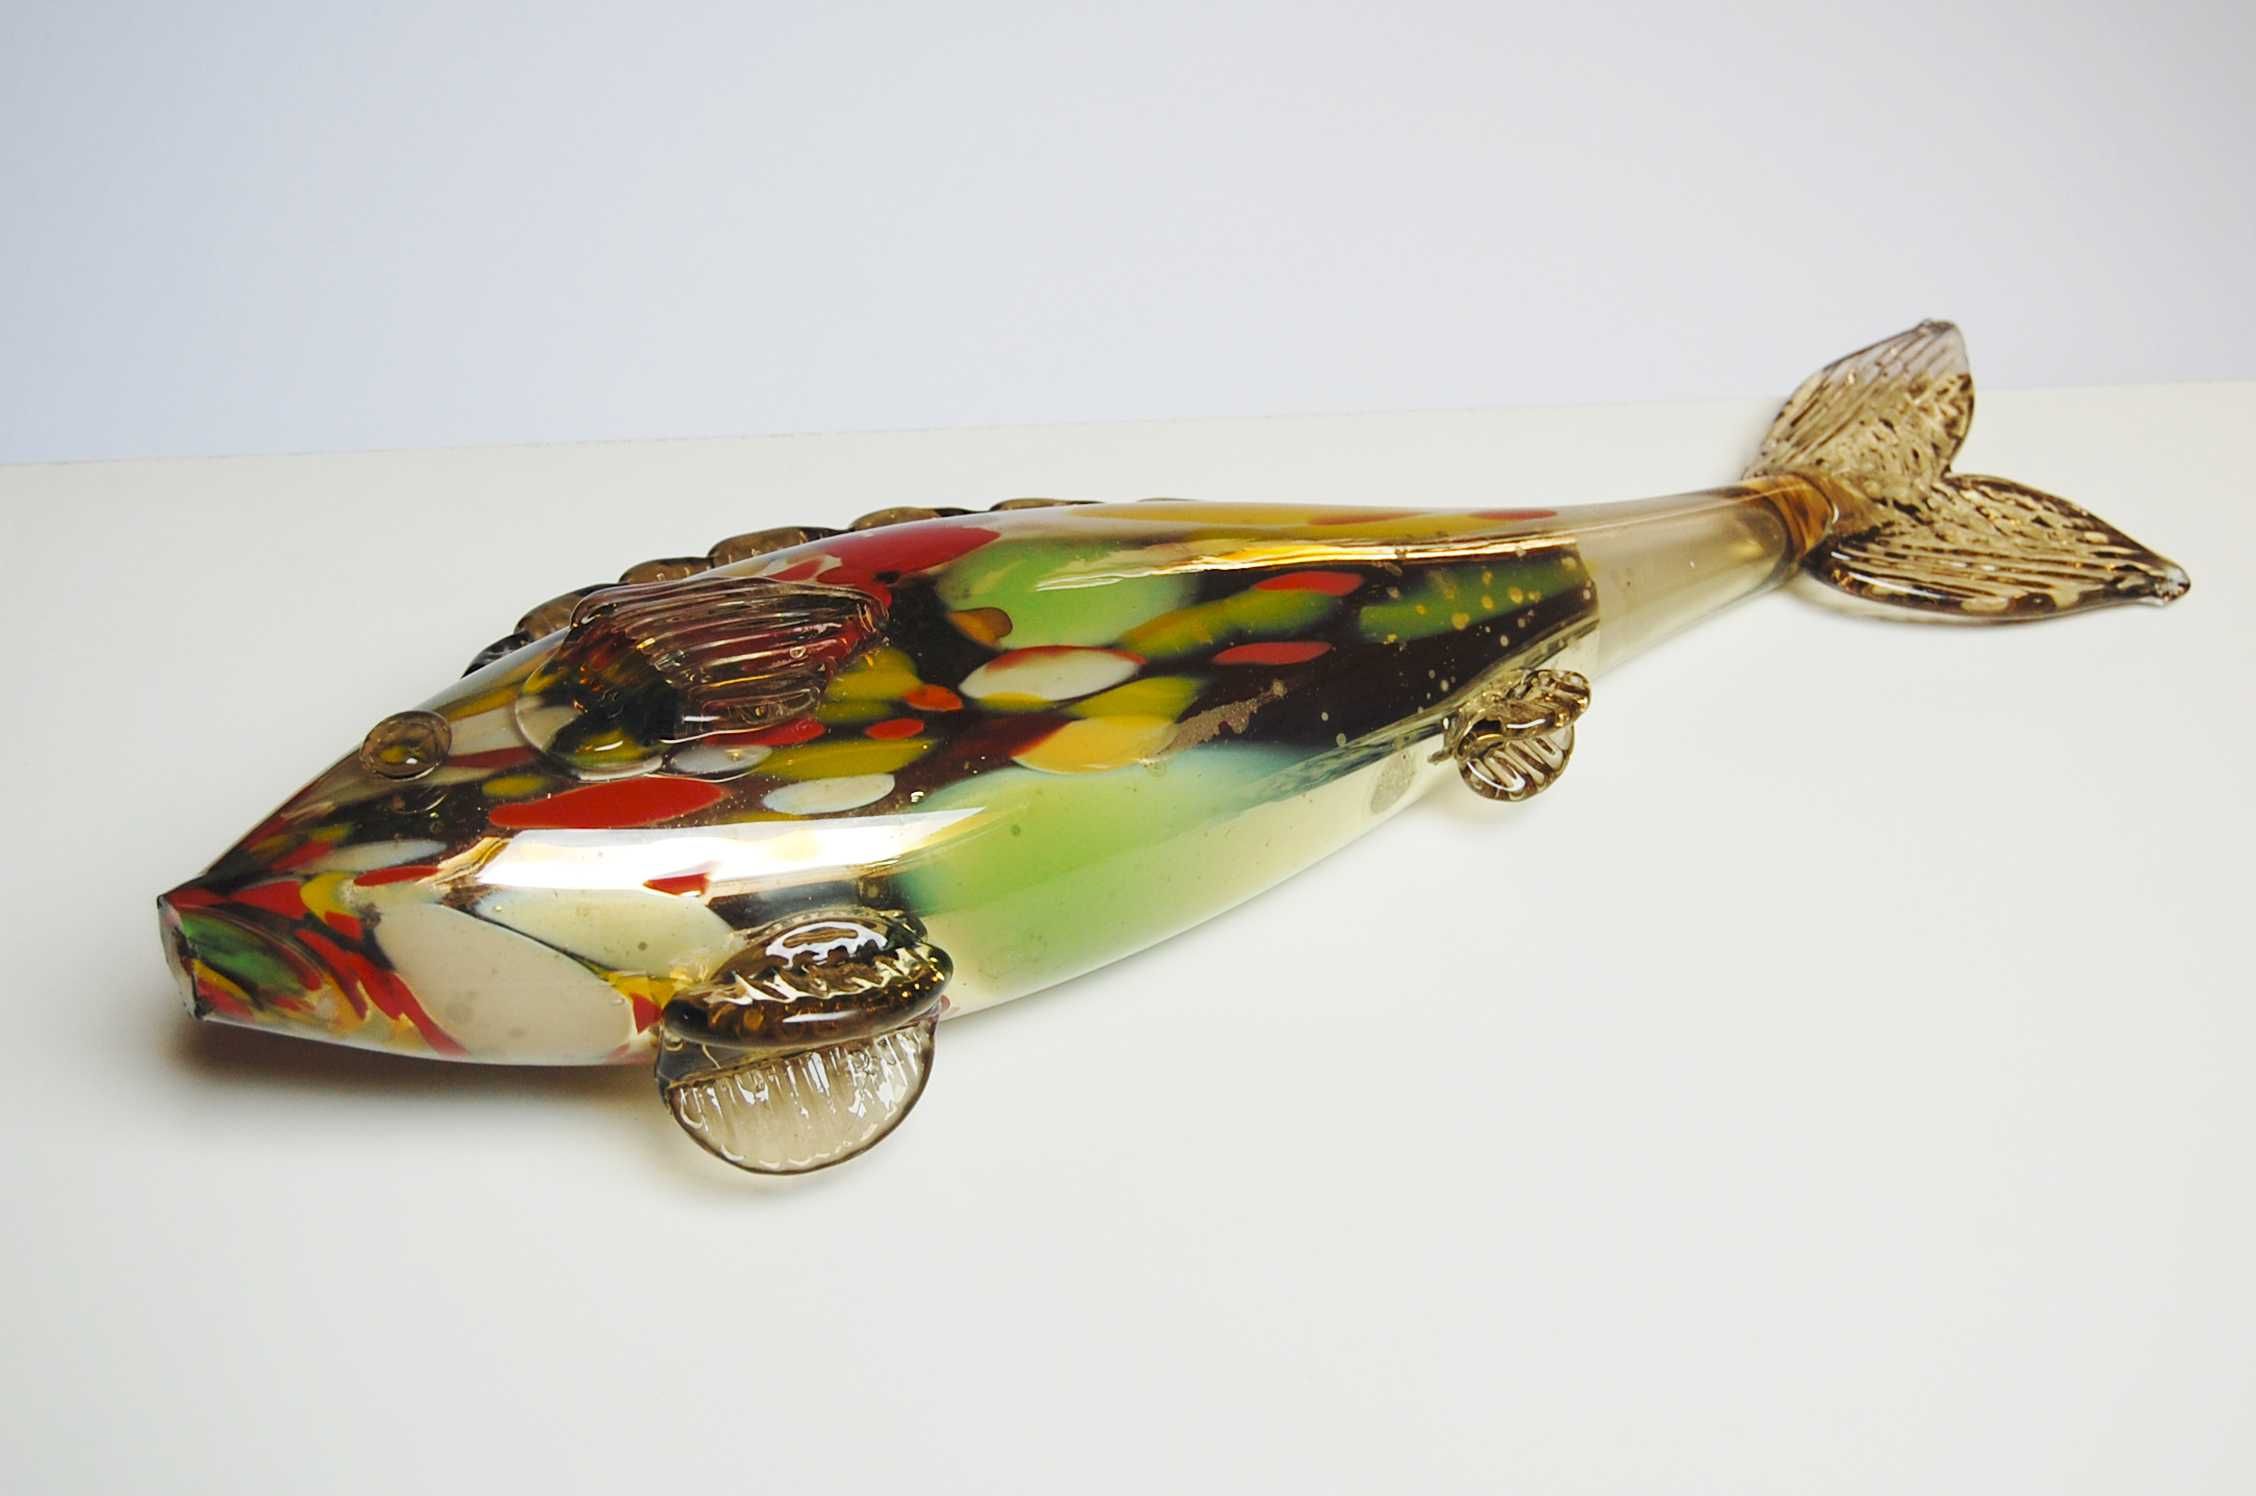 Ryba szklana figura 43 cm, szkło millefiori, PRL, vintage design